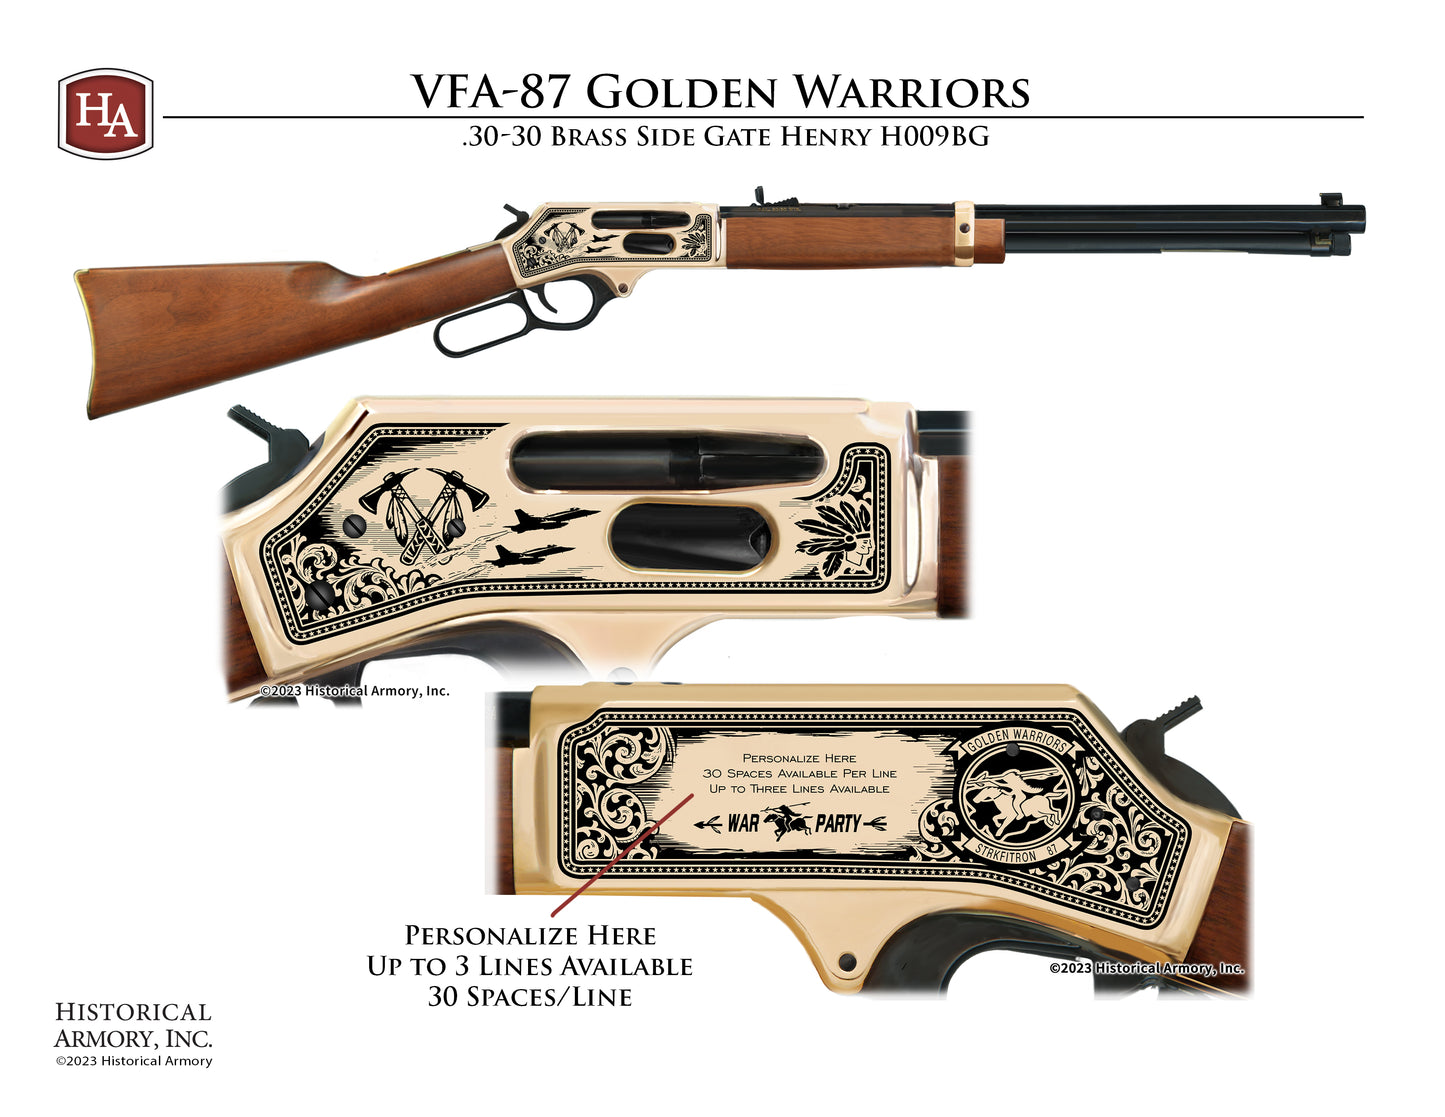 VFA-87 Edition